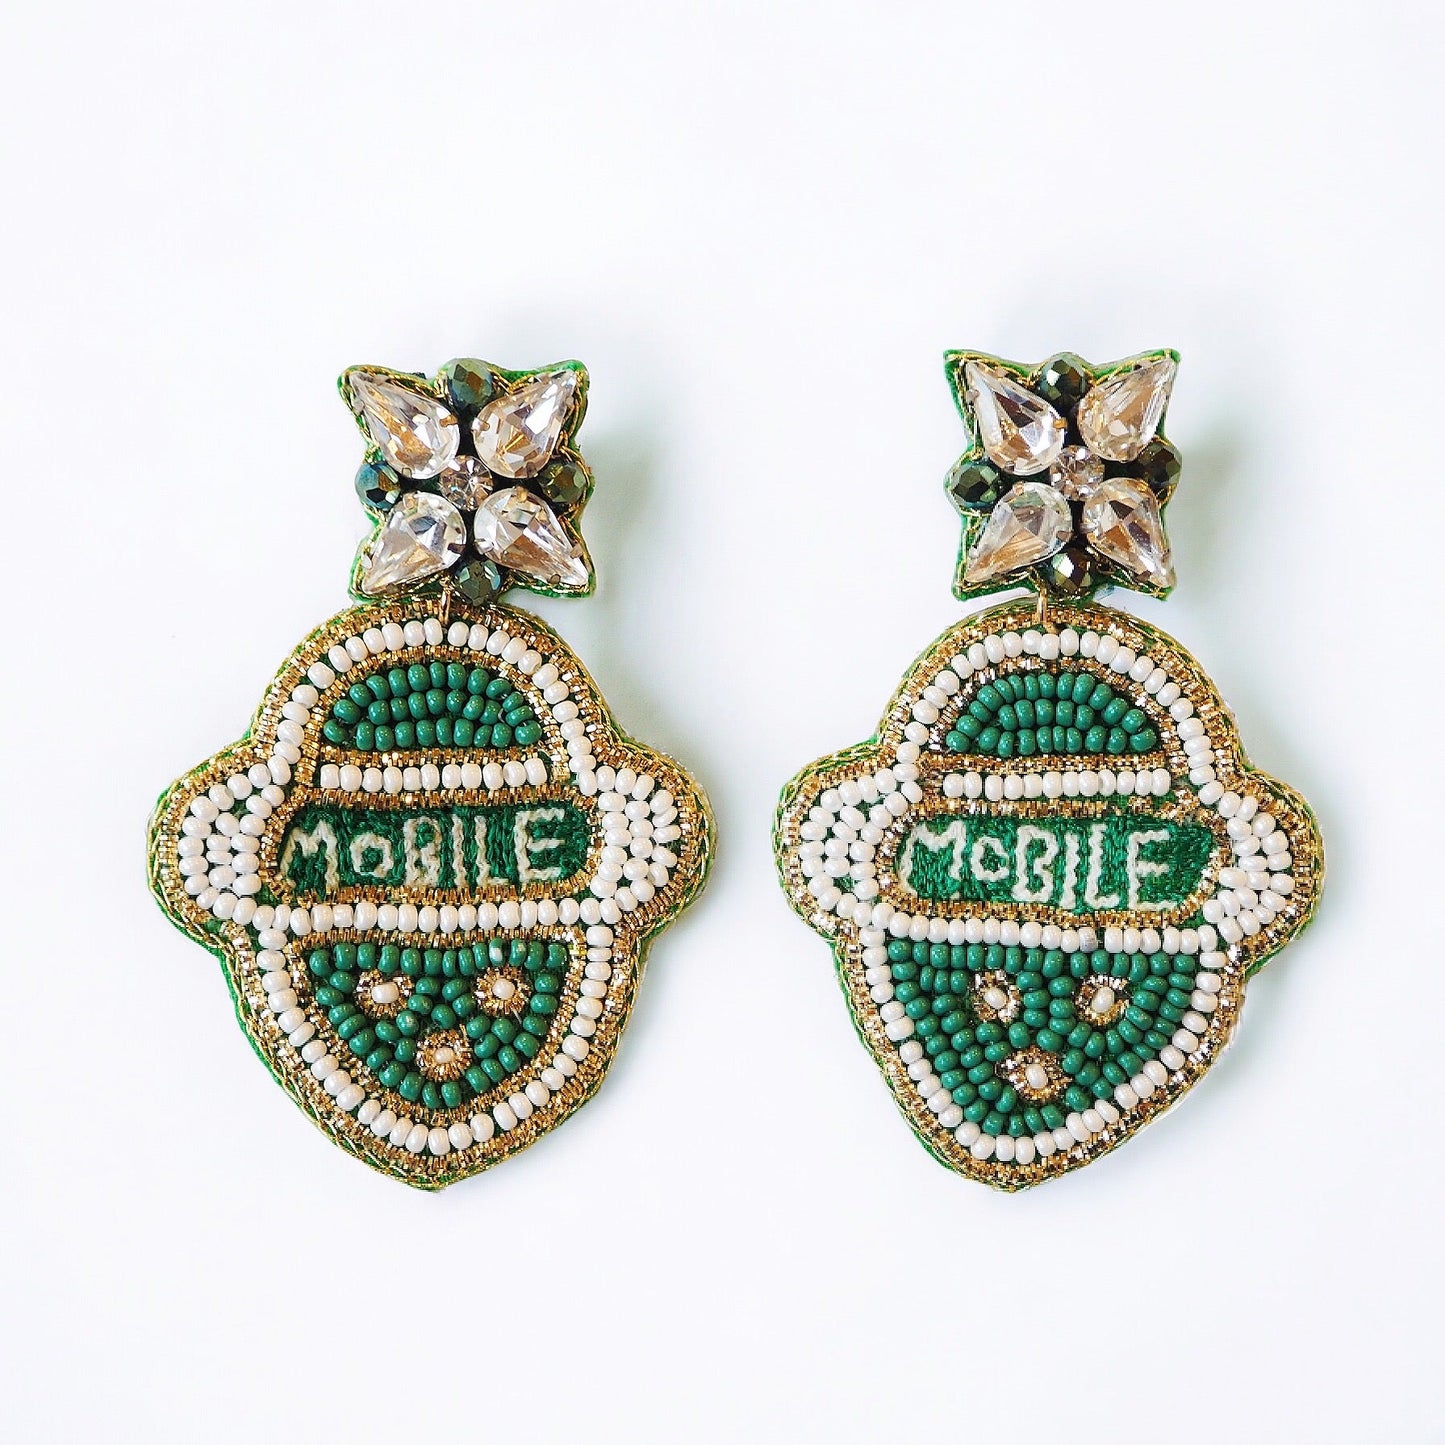 Mobile Leprechaun Earrings